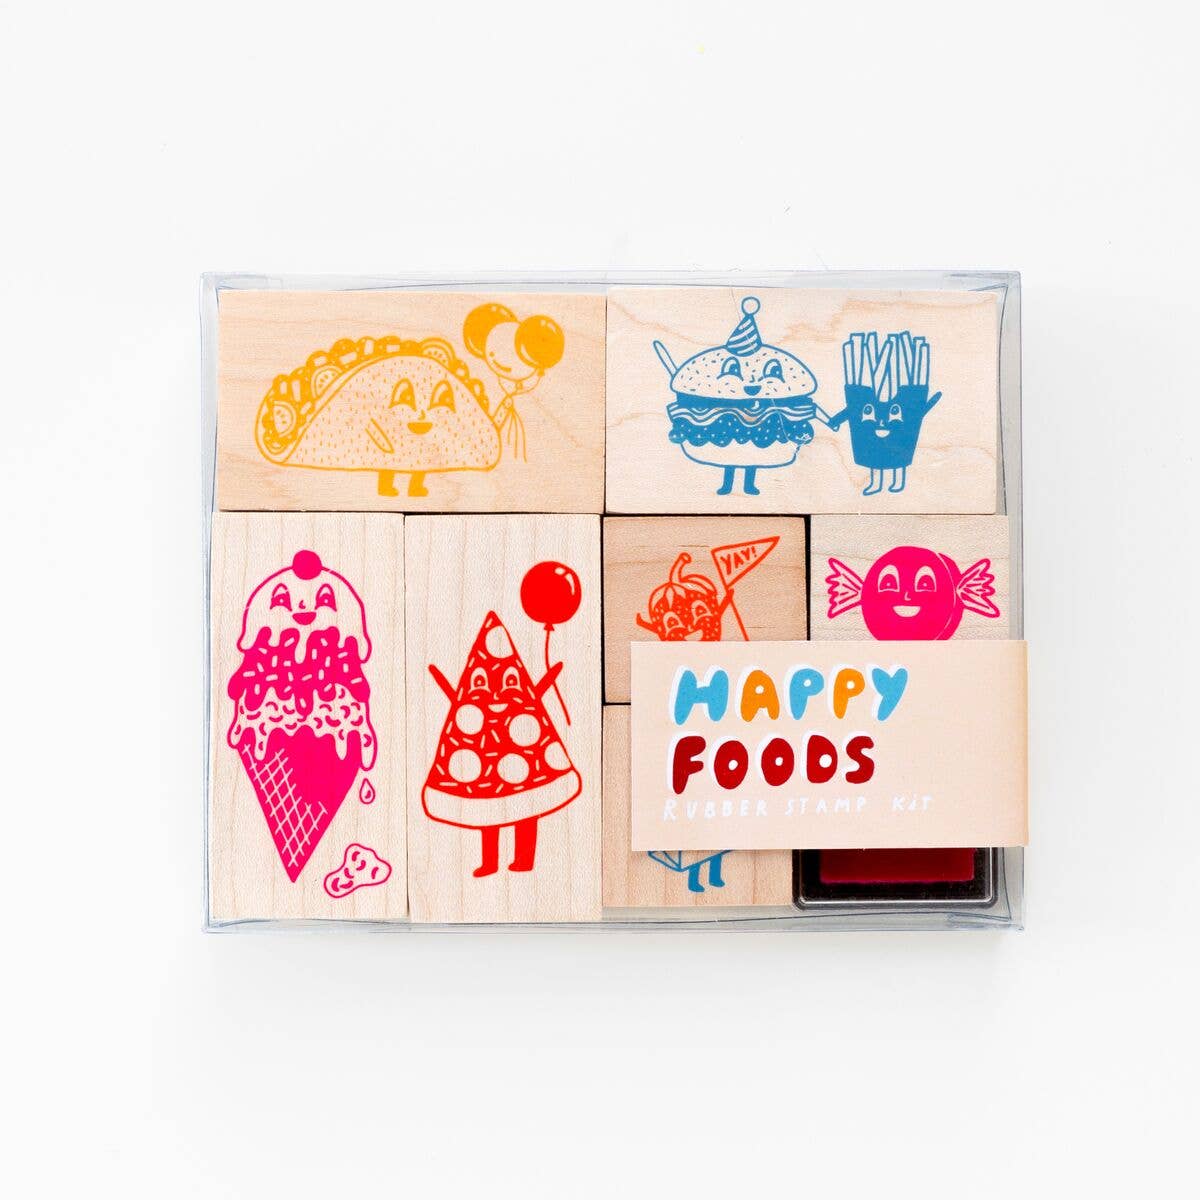 "Happy Foods" Stamp Kit